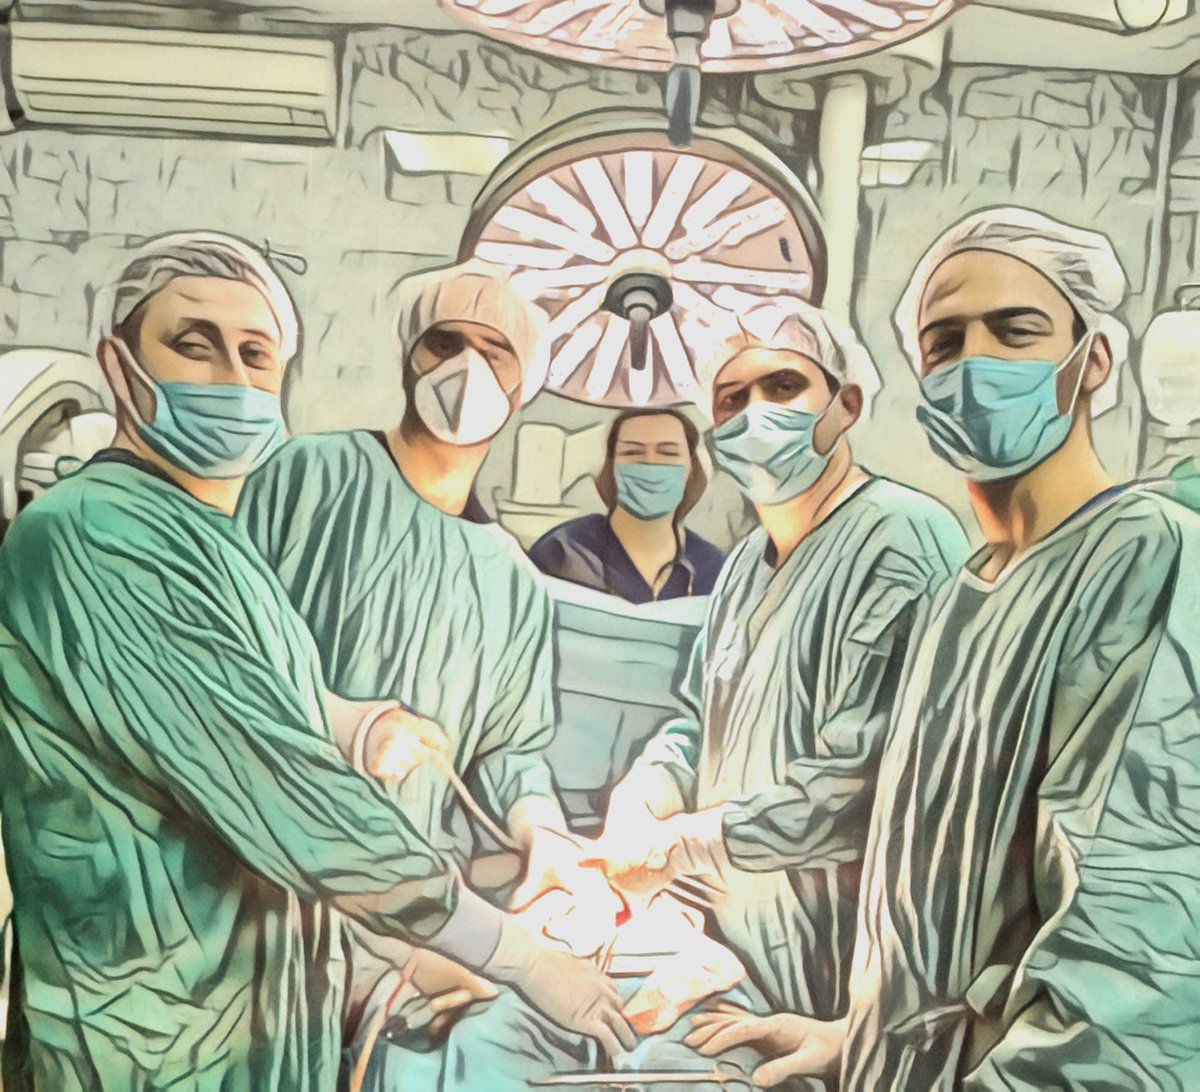 #urology #urologysurgery #surgery #urooncology #klinickicentarcrnegore #urologyspecialists #odjeljenjeuroonkologije #urologyclinic #menshealth
@rebronjaalmir